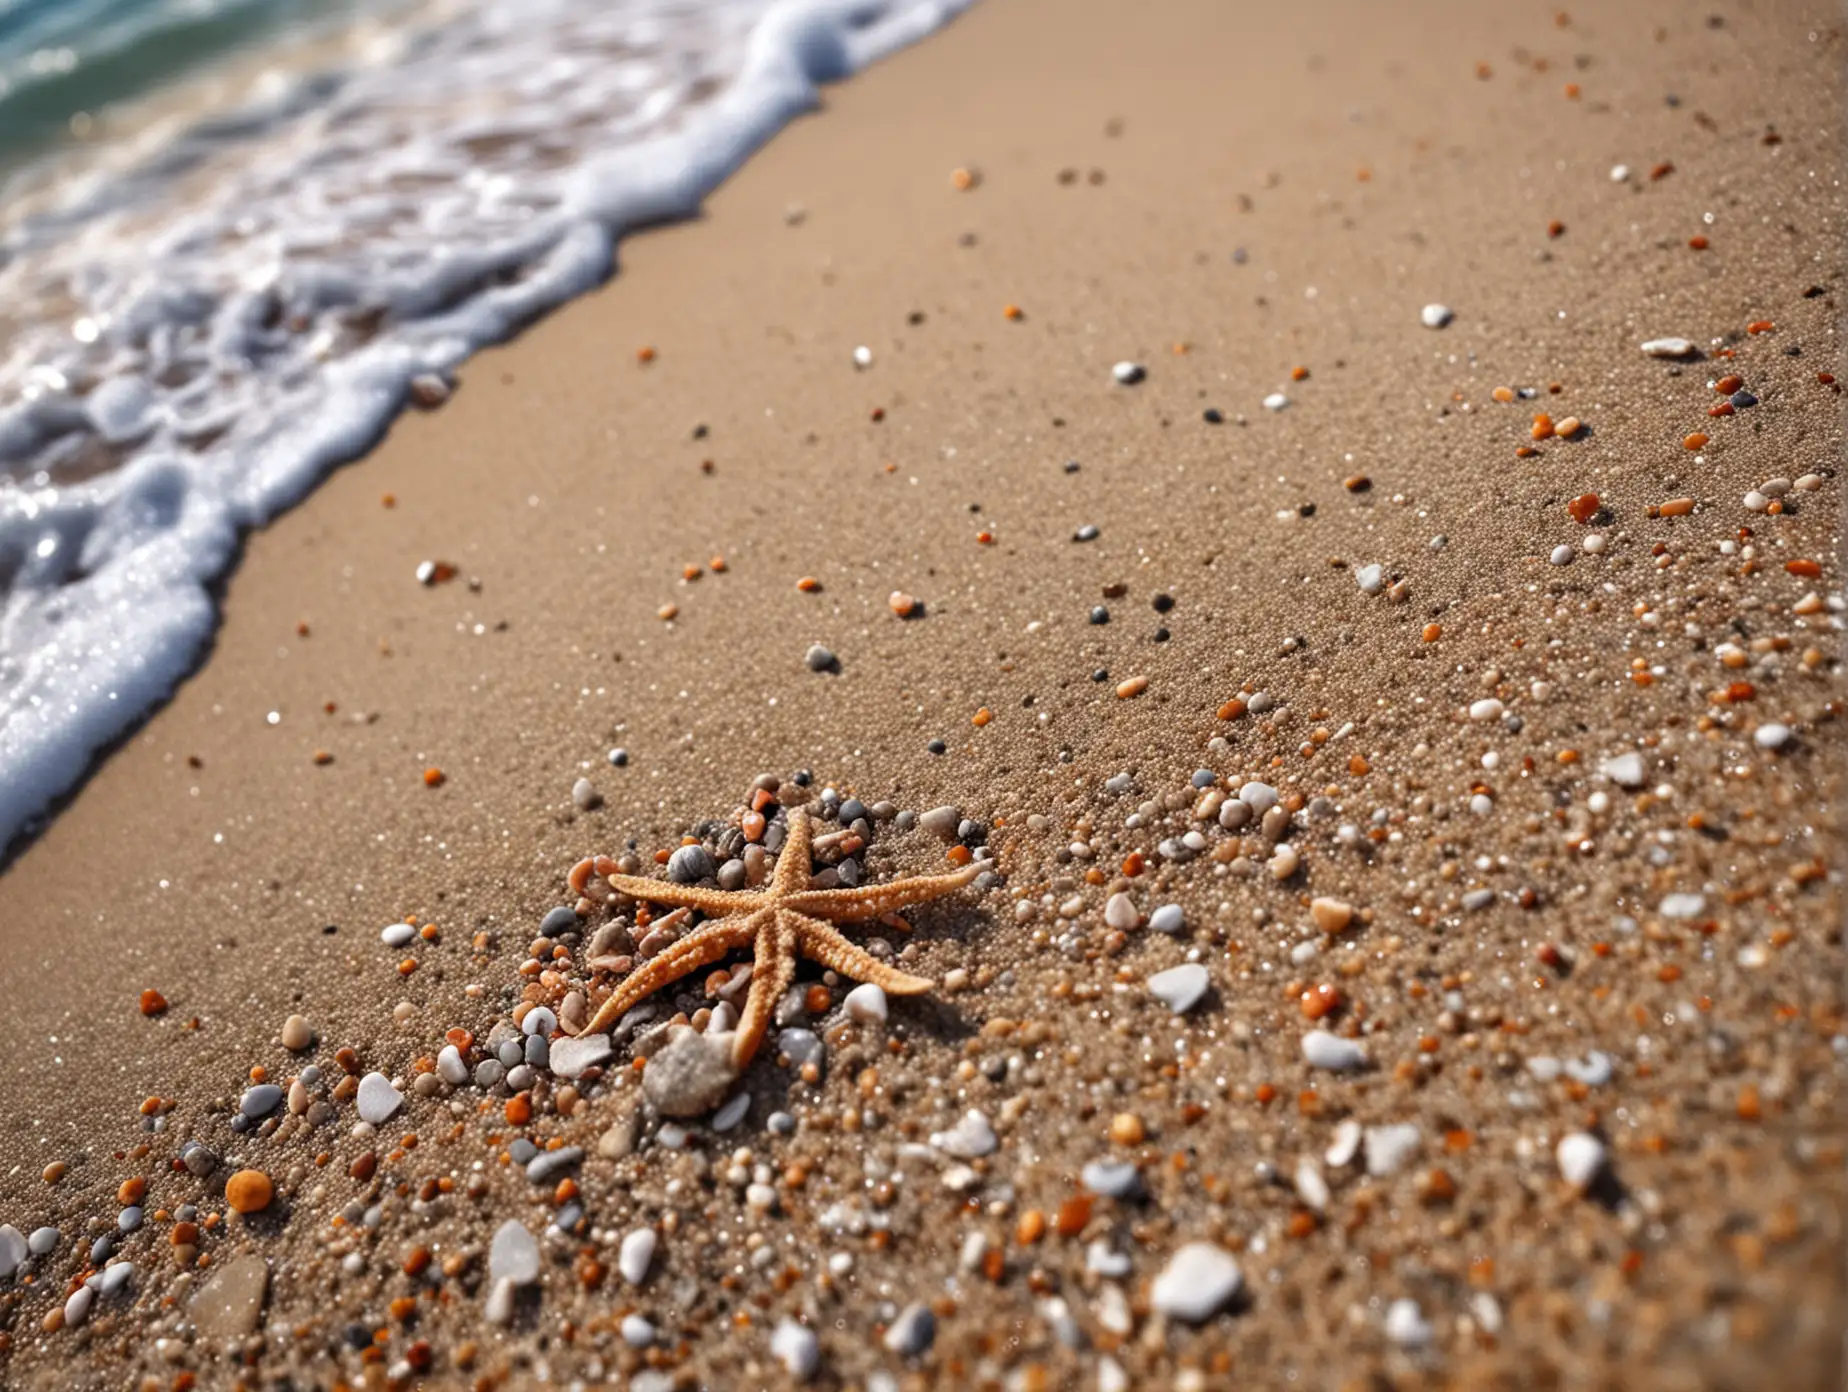 A BEAUTIFUL BEACH, MACRO
PHOTOGRAPHY